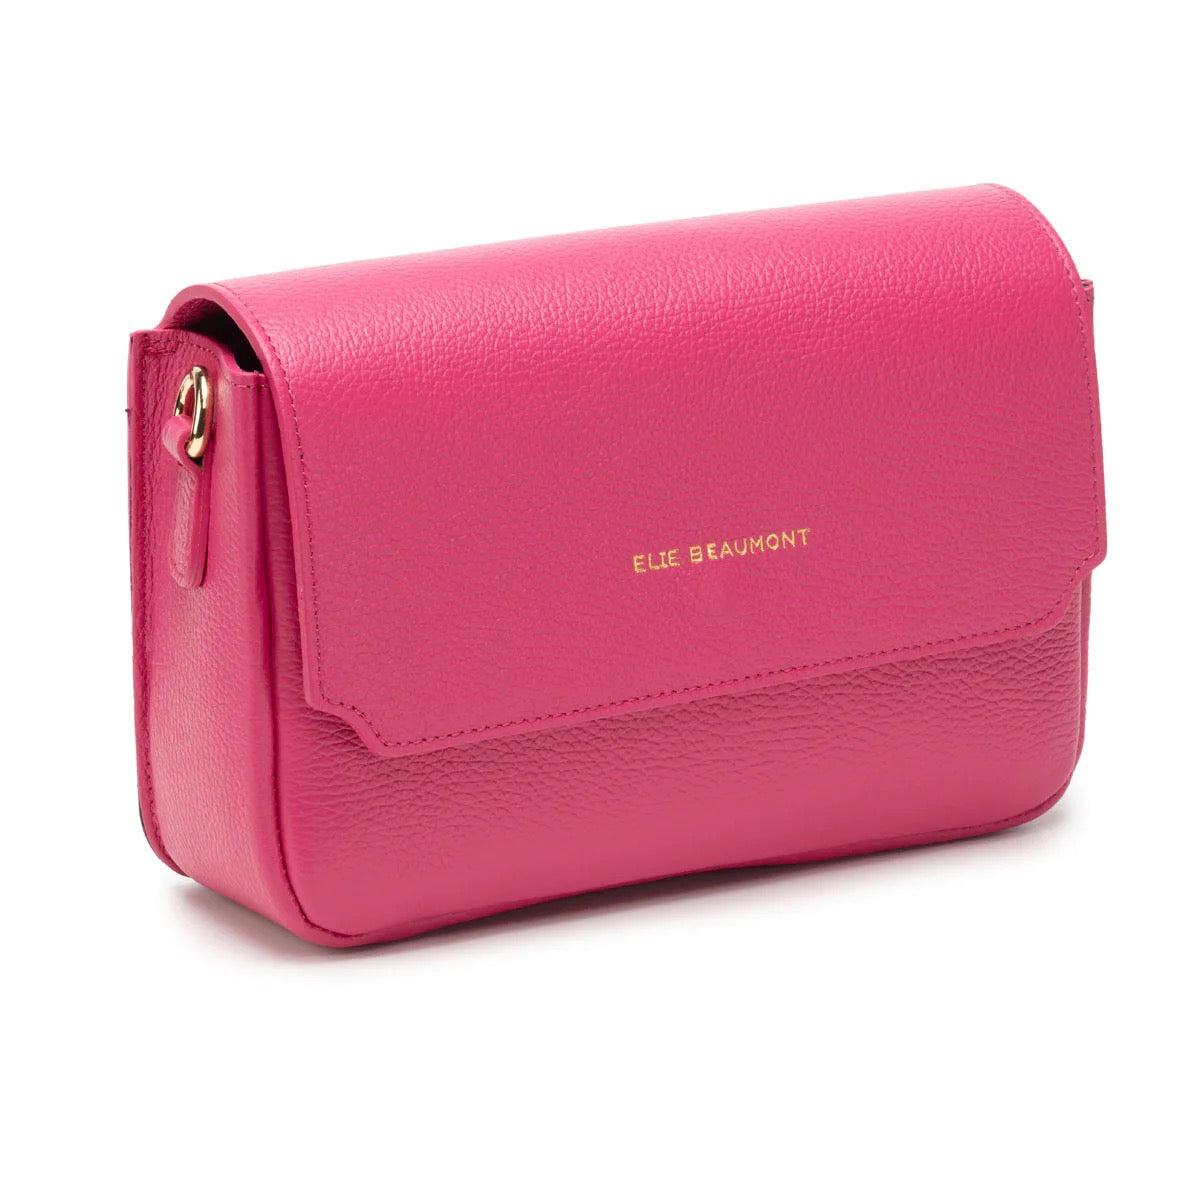 Elie Beaumont Fold Crossbody Bag - Cerise Pink